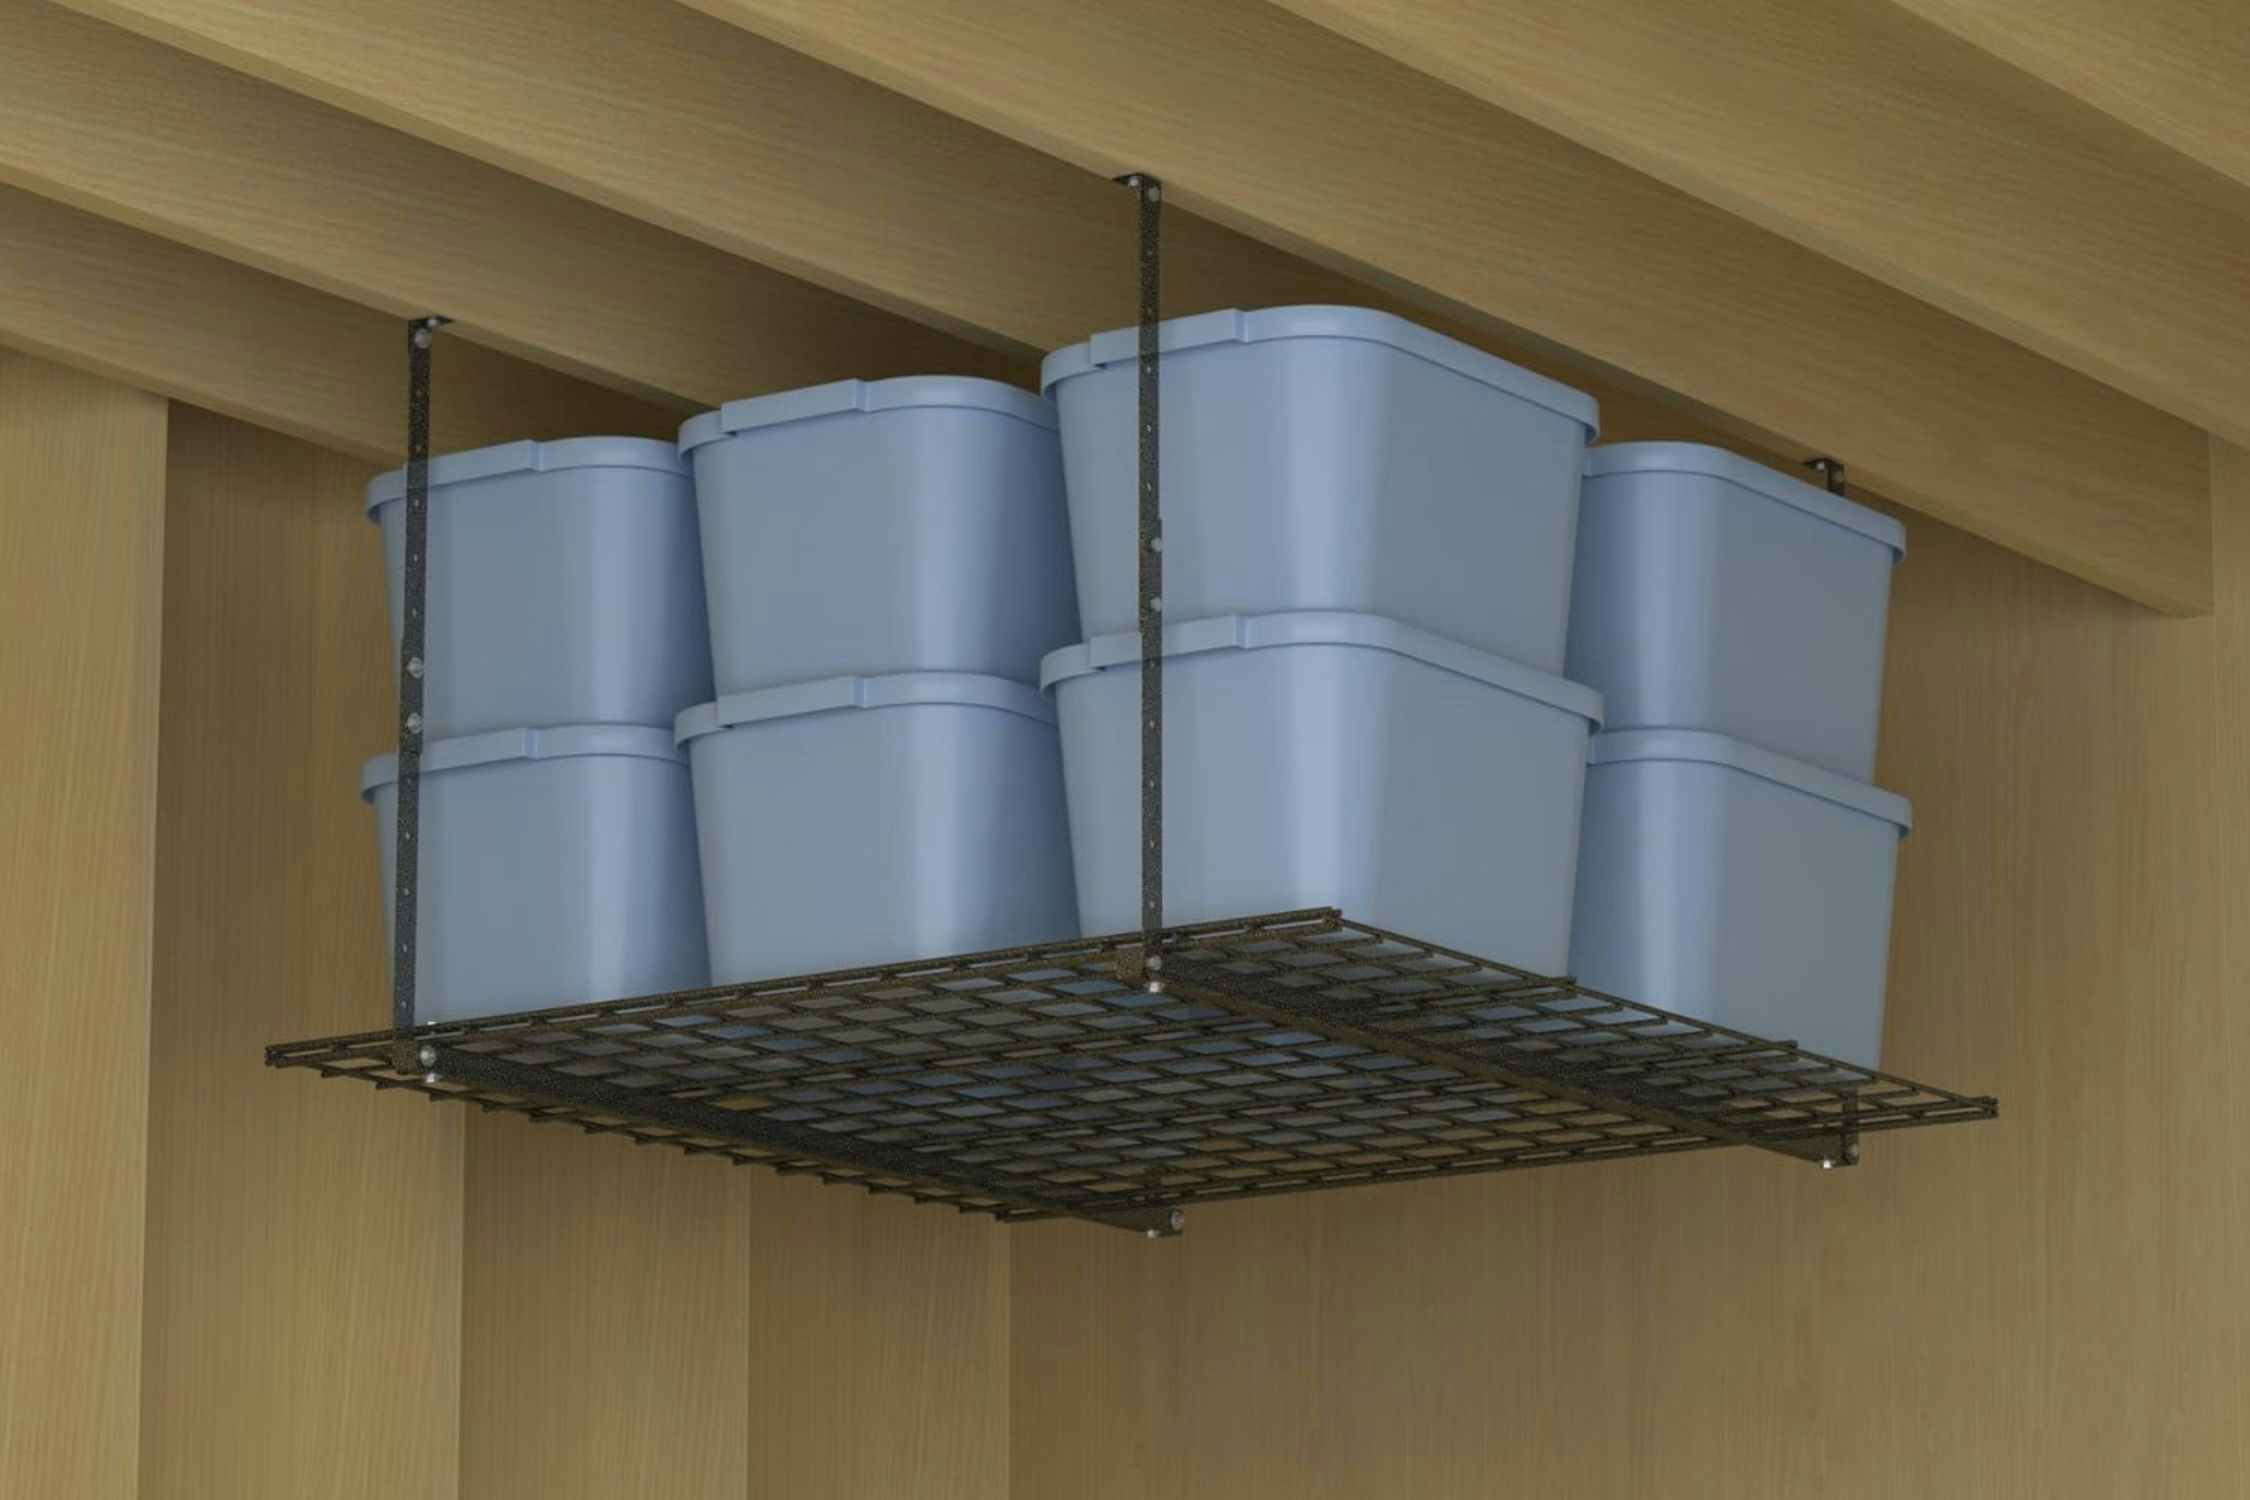 Overhead Steel Garage Storage System, $45.89 on Amazon (Reg. $129)